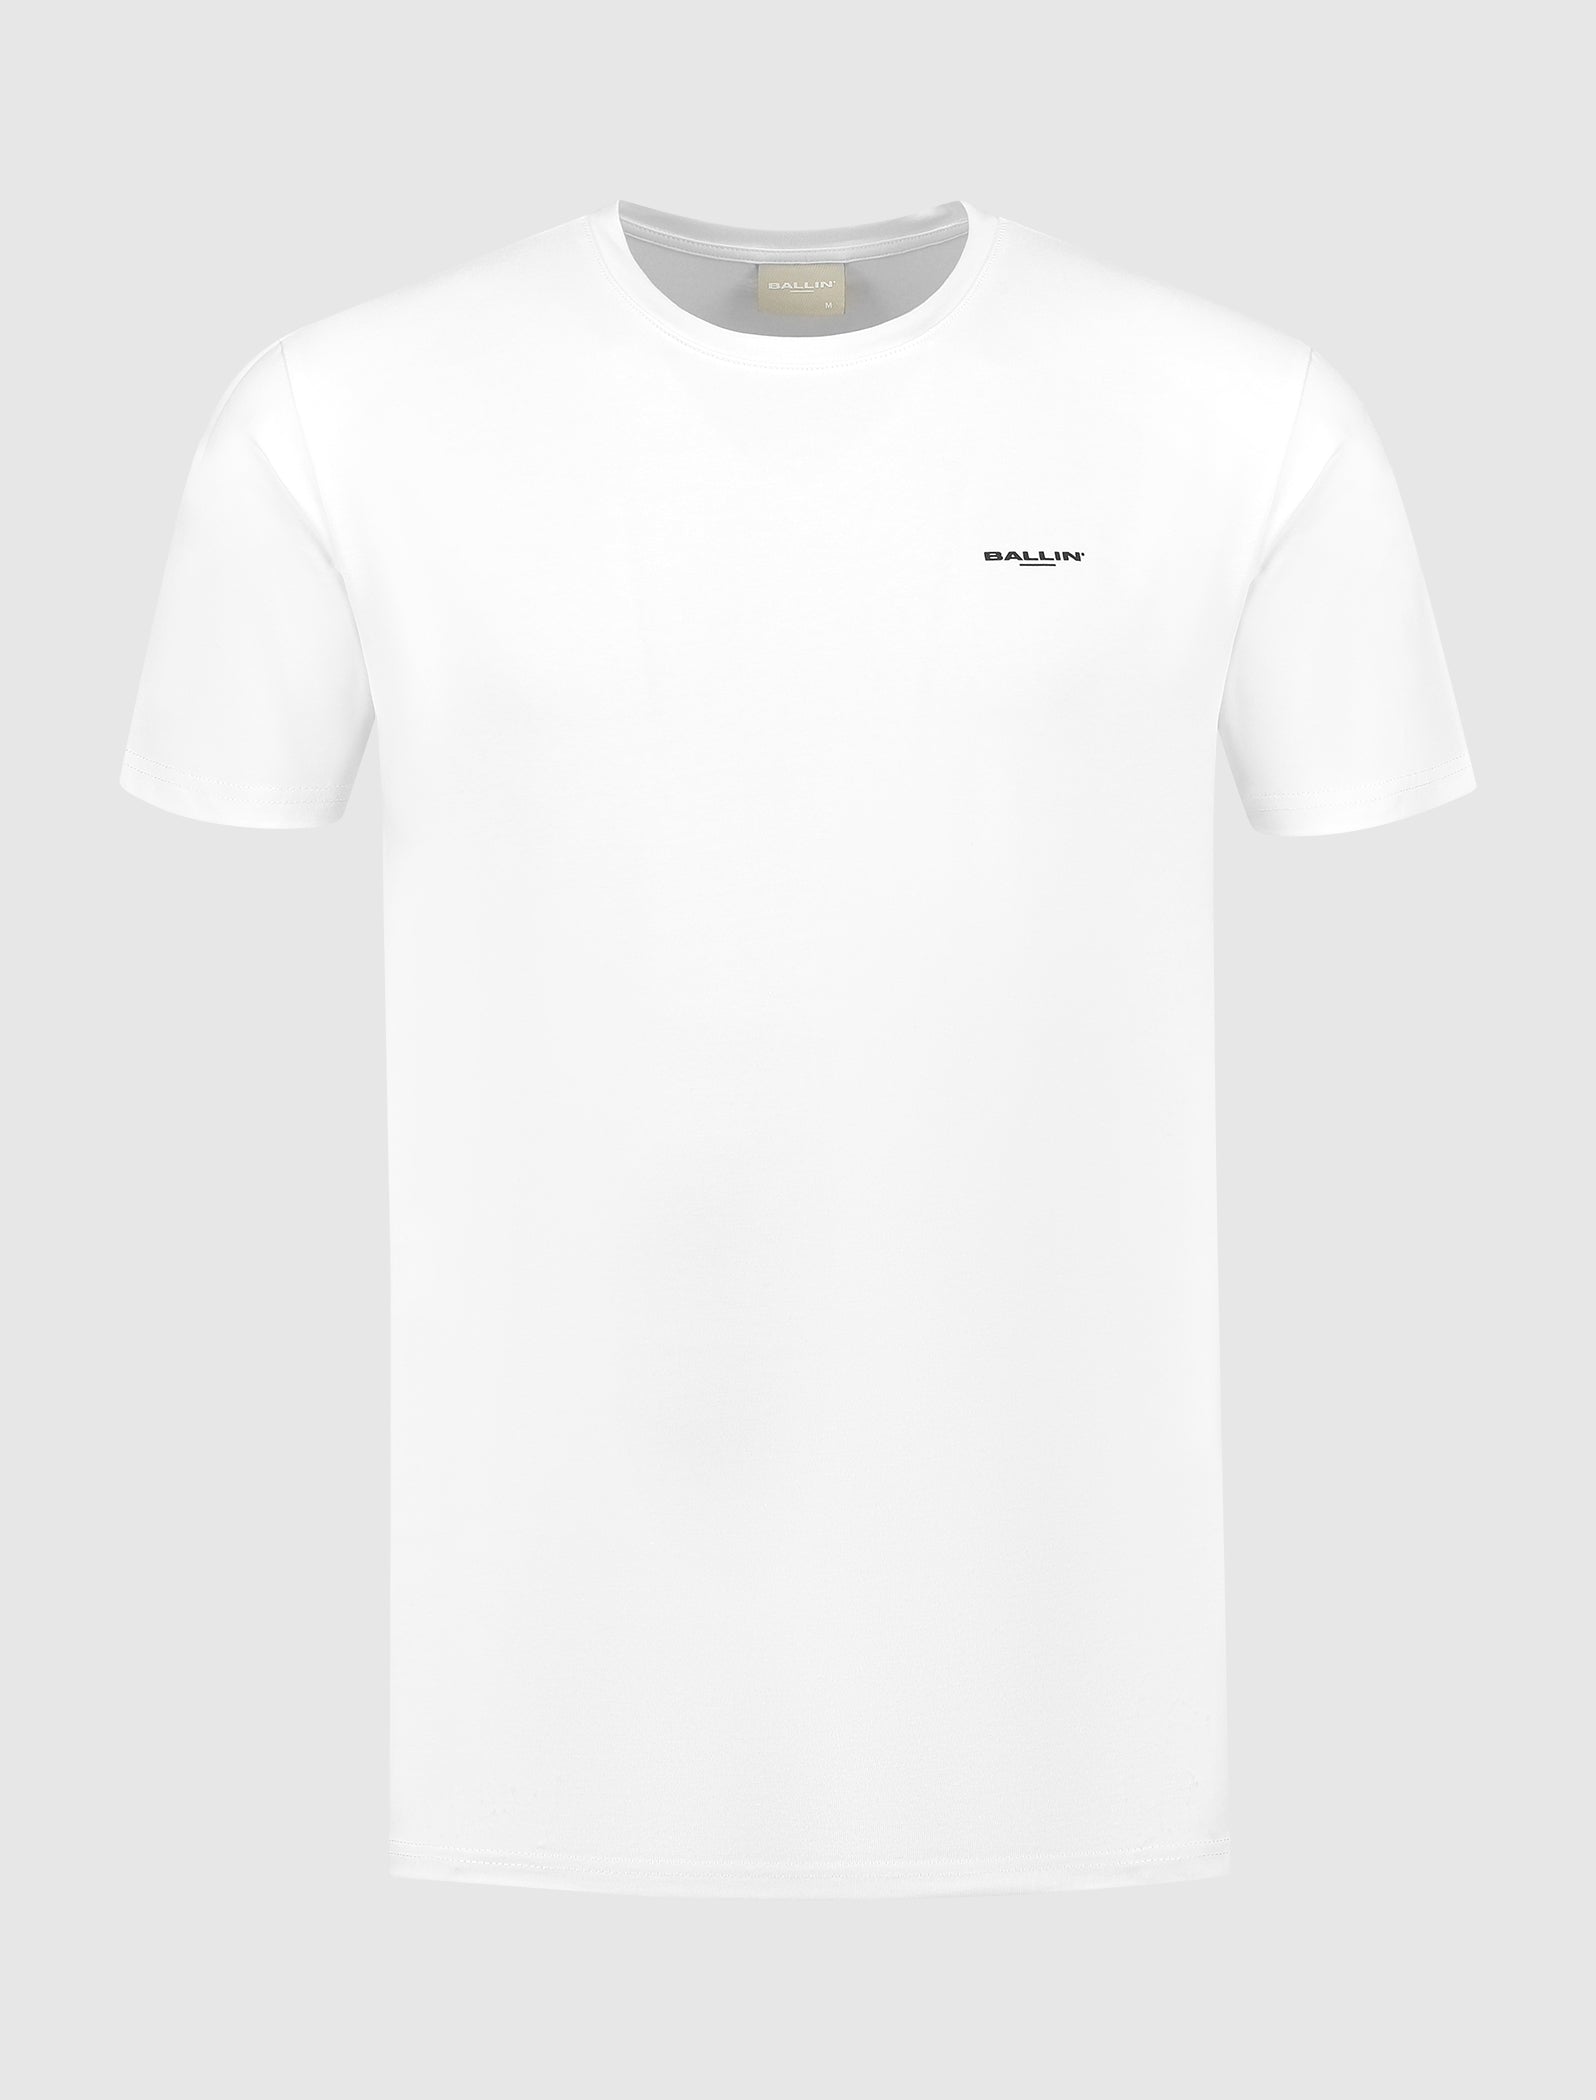 World Tour T-shirt | White